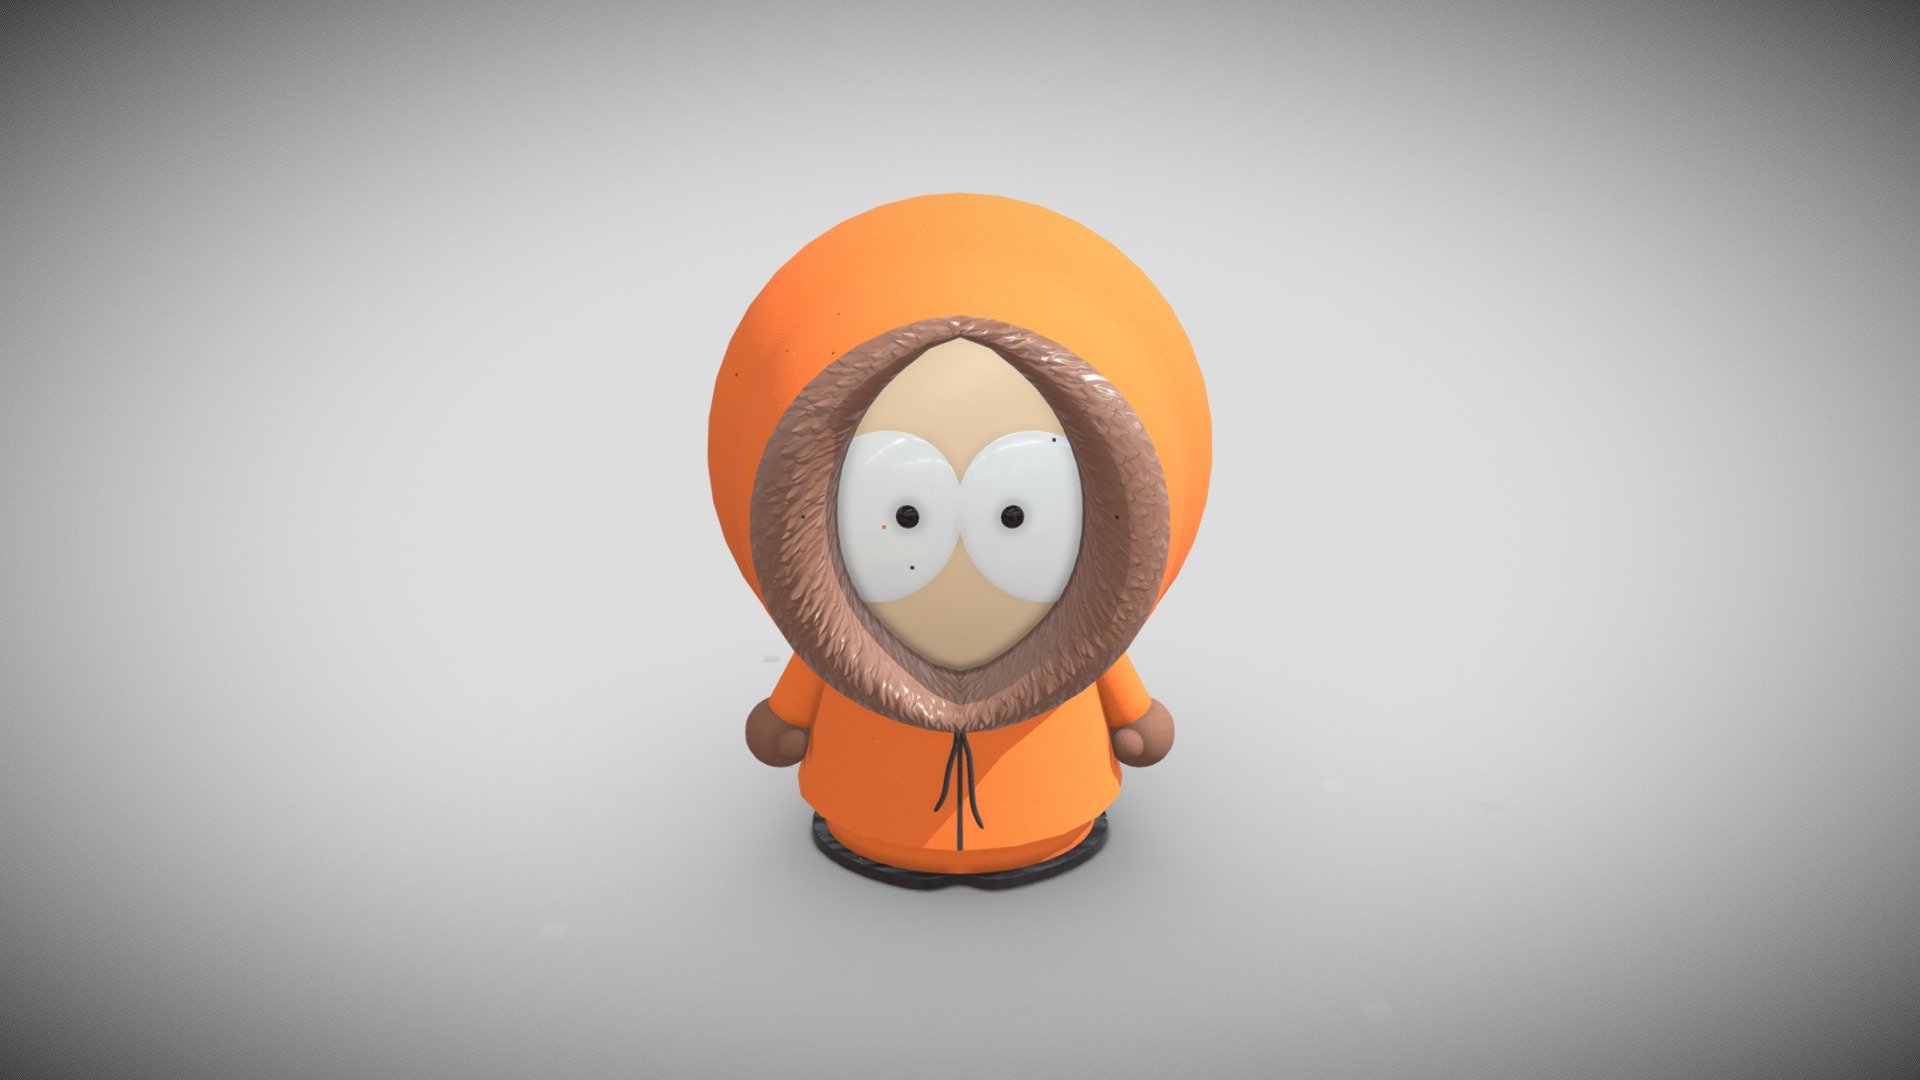 3D Model I made, based on the South Park show 3d model